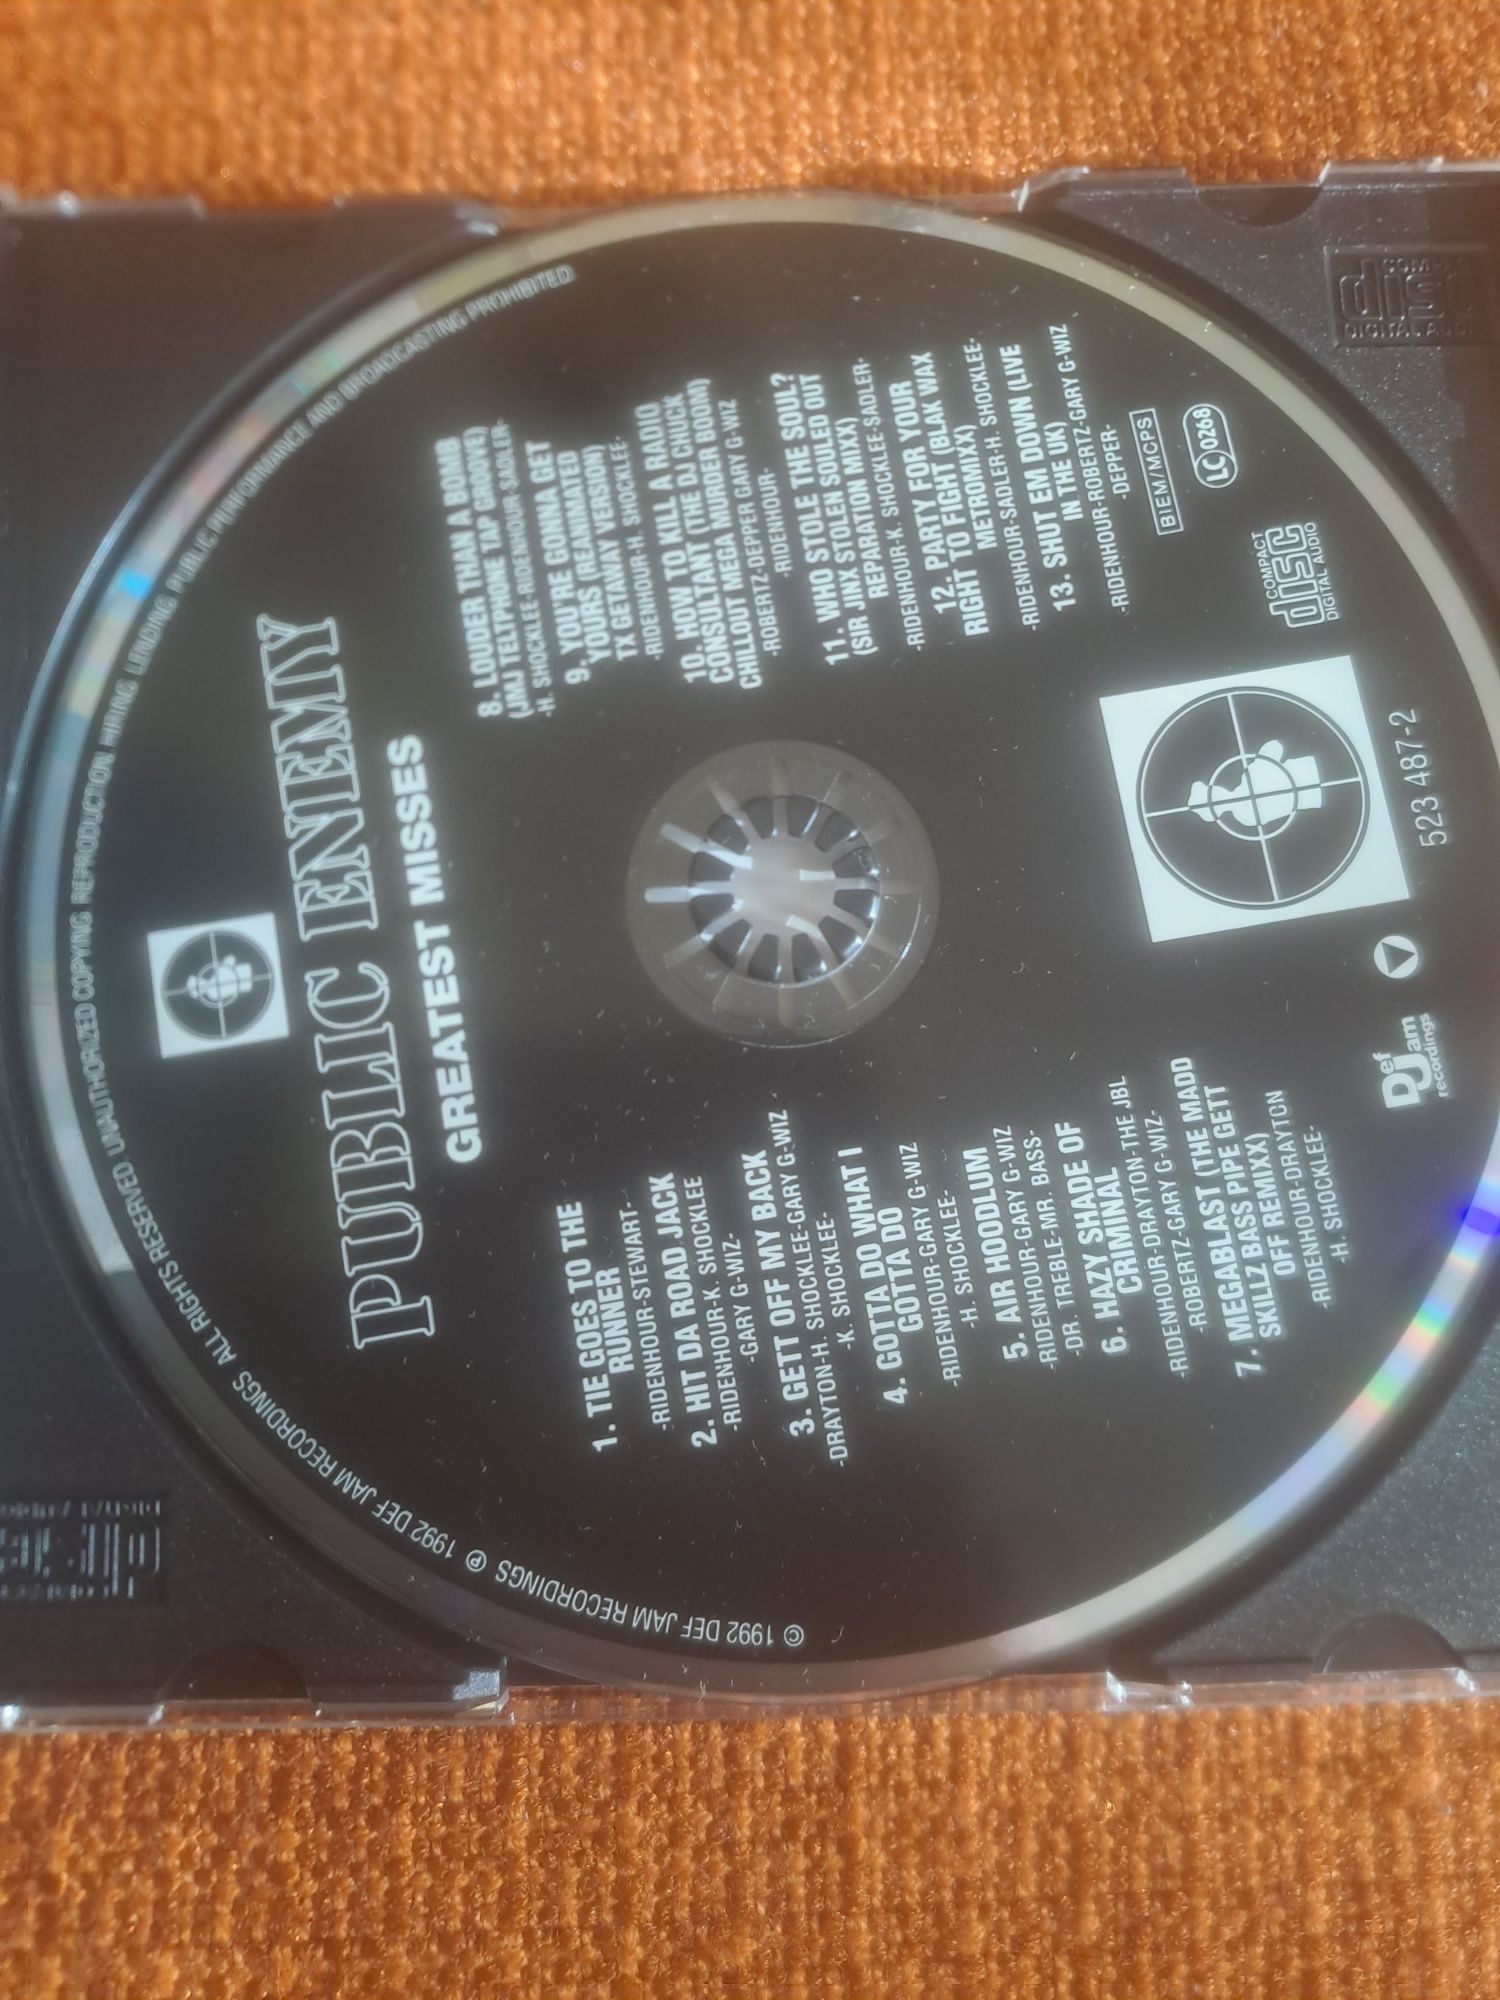 Public Enemy - Greatest Misses CD